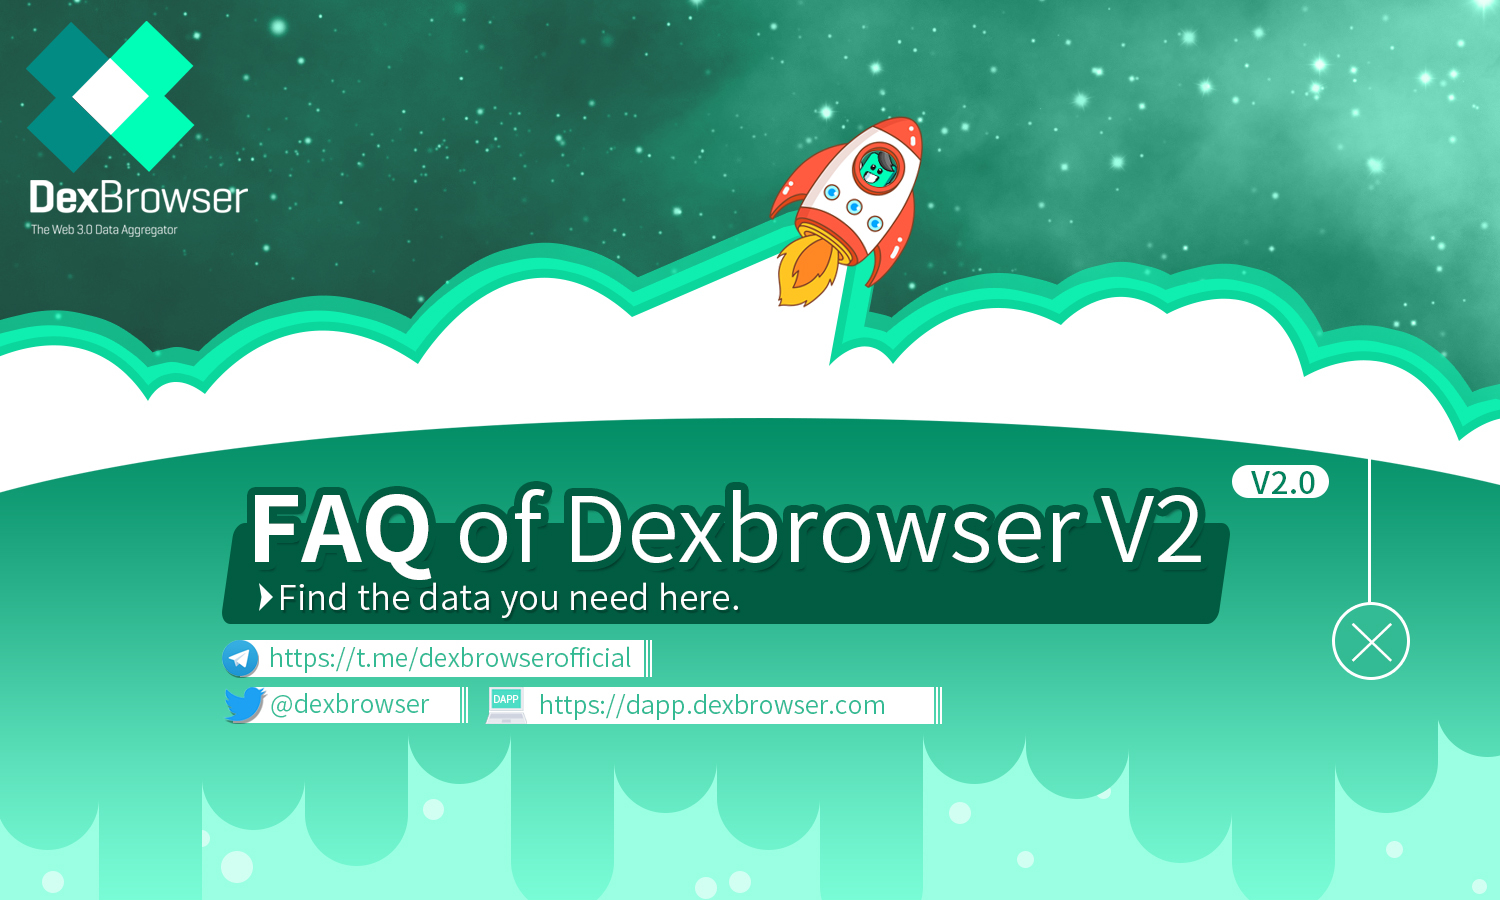 Dexbrowser V2 FAQ